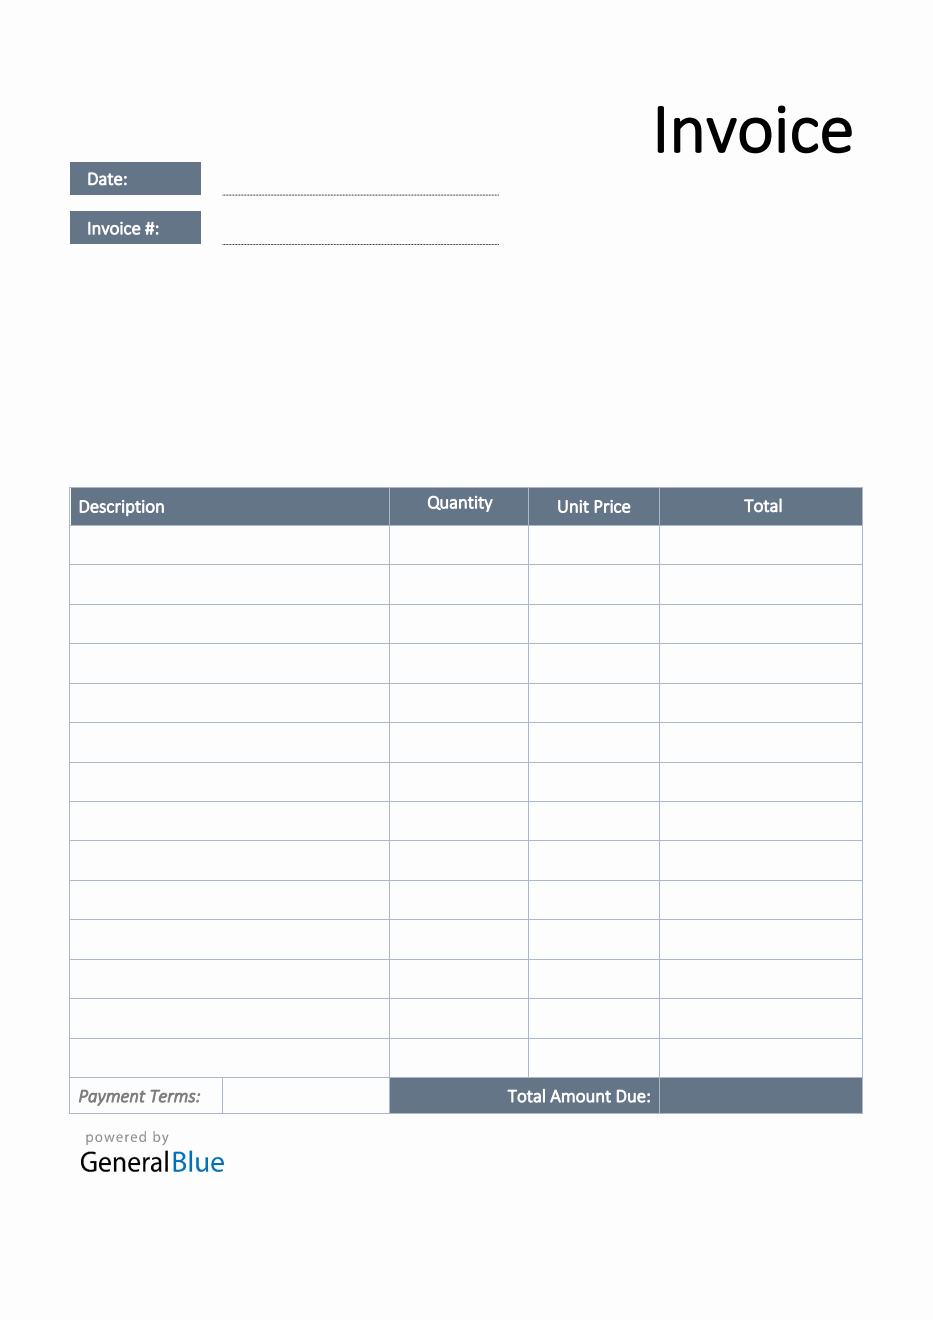 Invoice Template for U.K. in PDF (Simple)